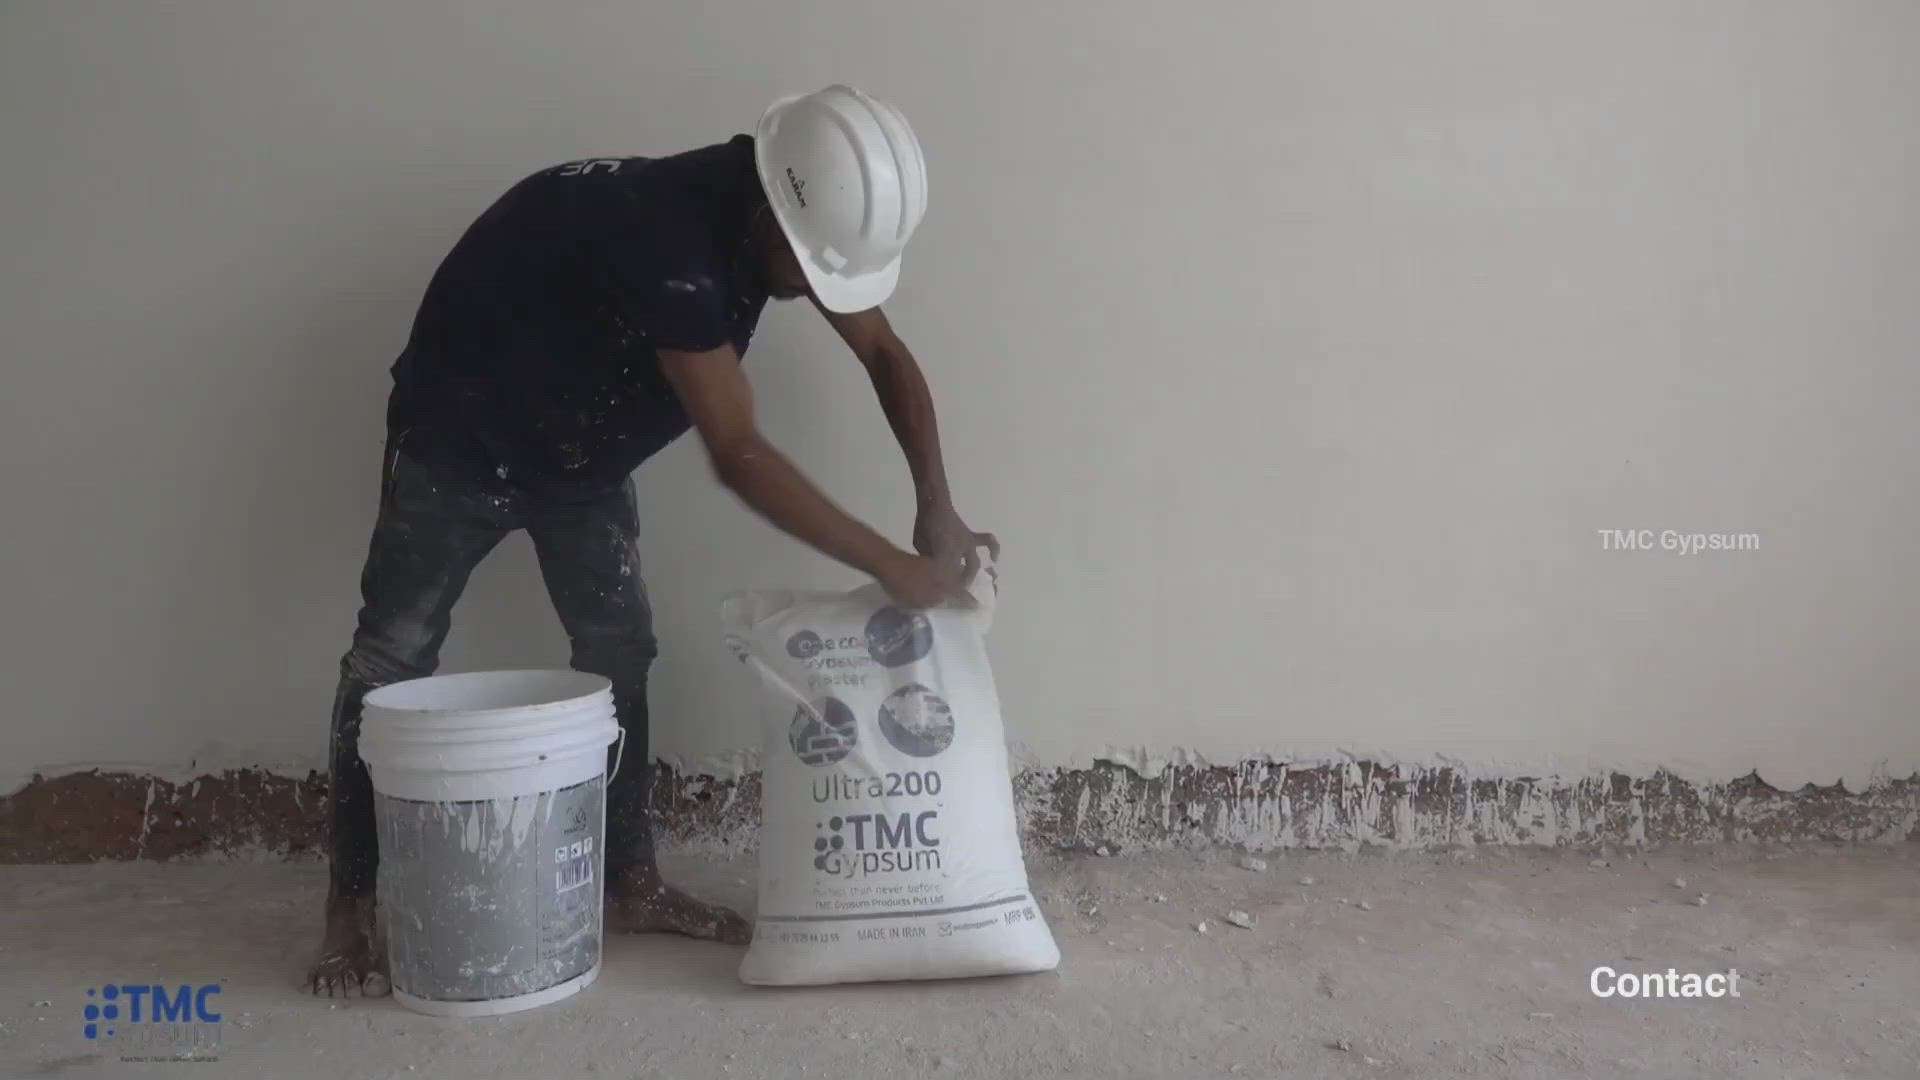 TMC Gypsum plaster
Method of application